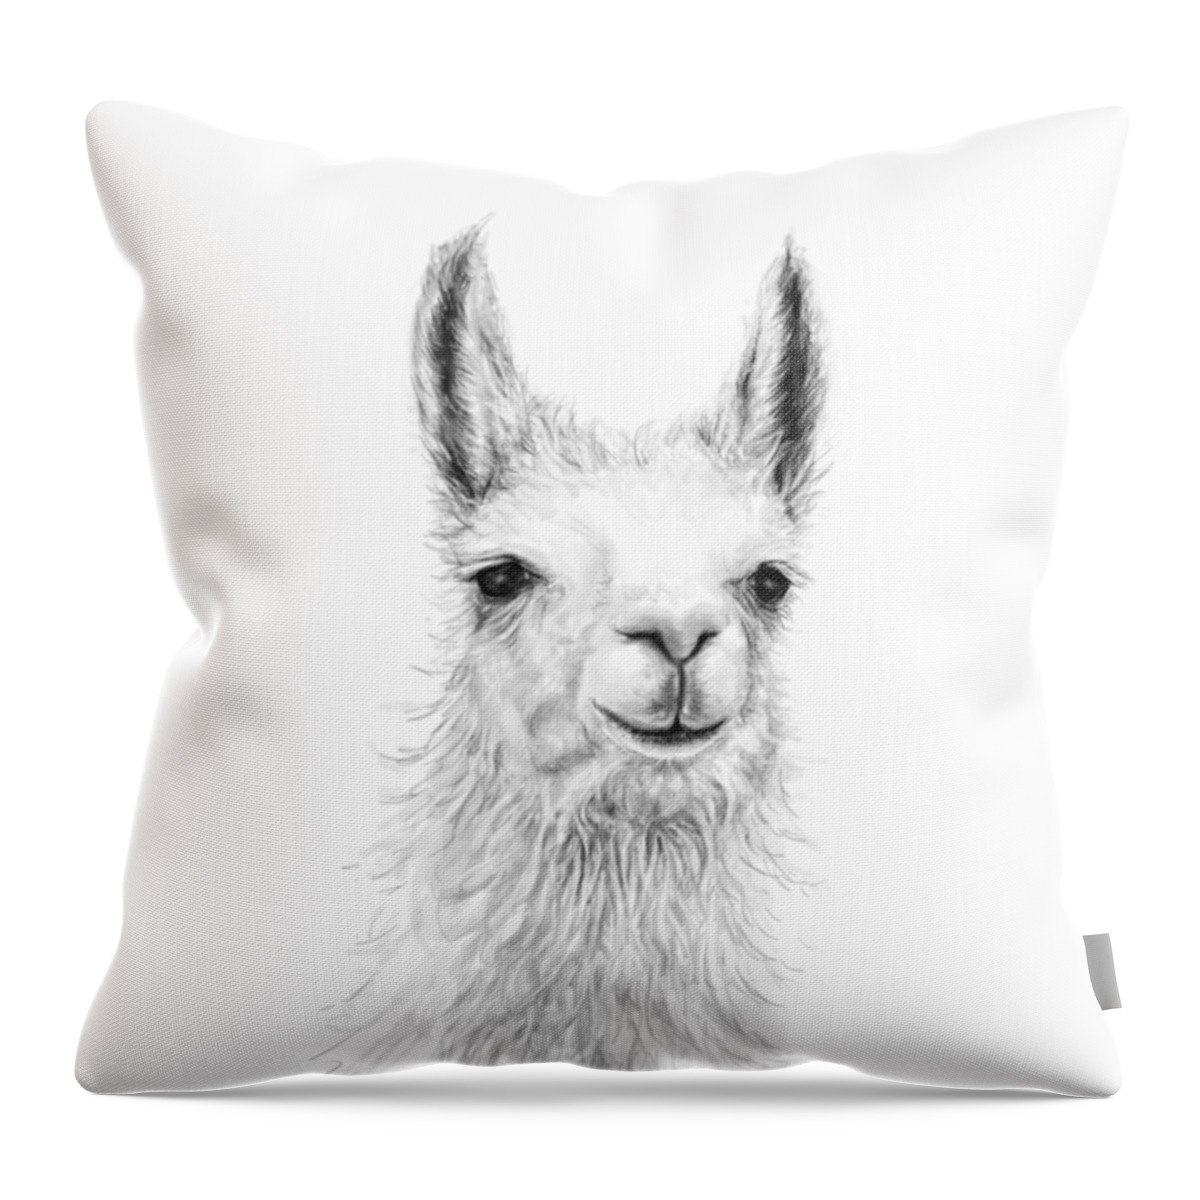 Llama Art Throw Pillow featuring the drawing Emily by Kristin Llamas